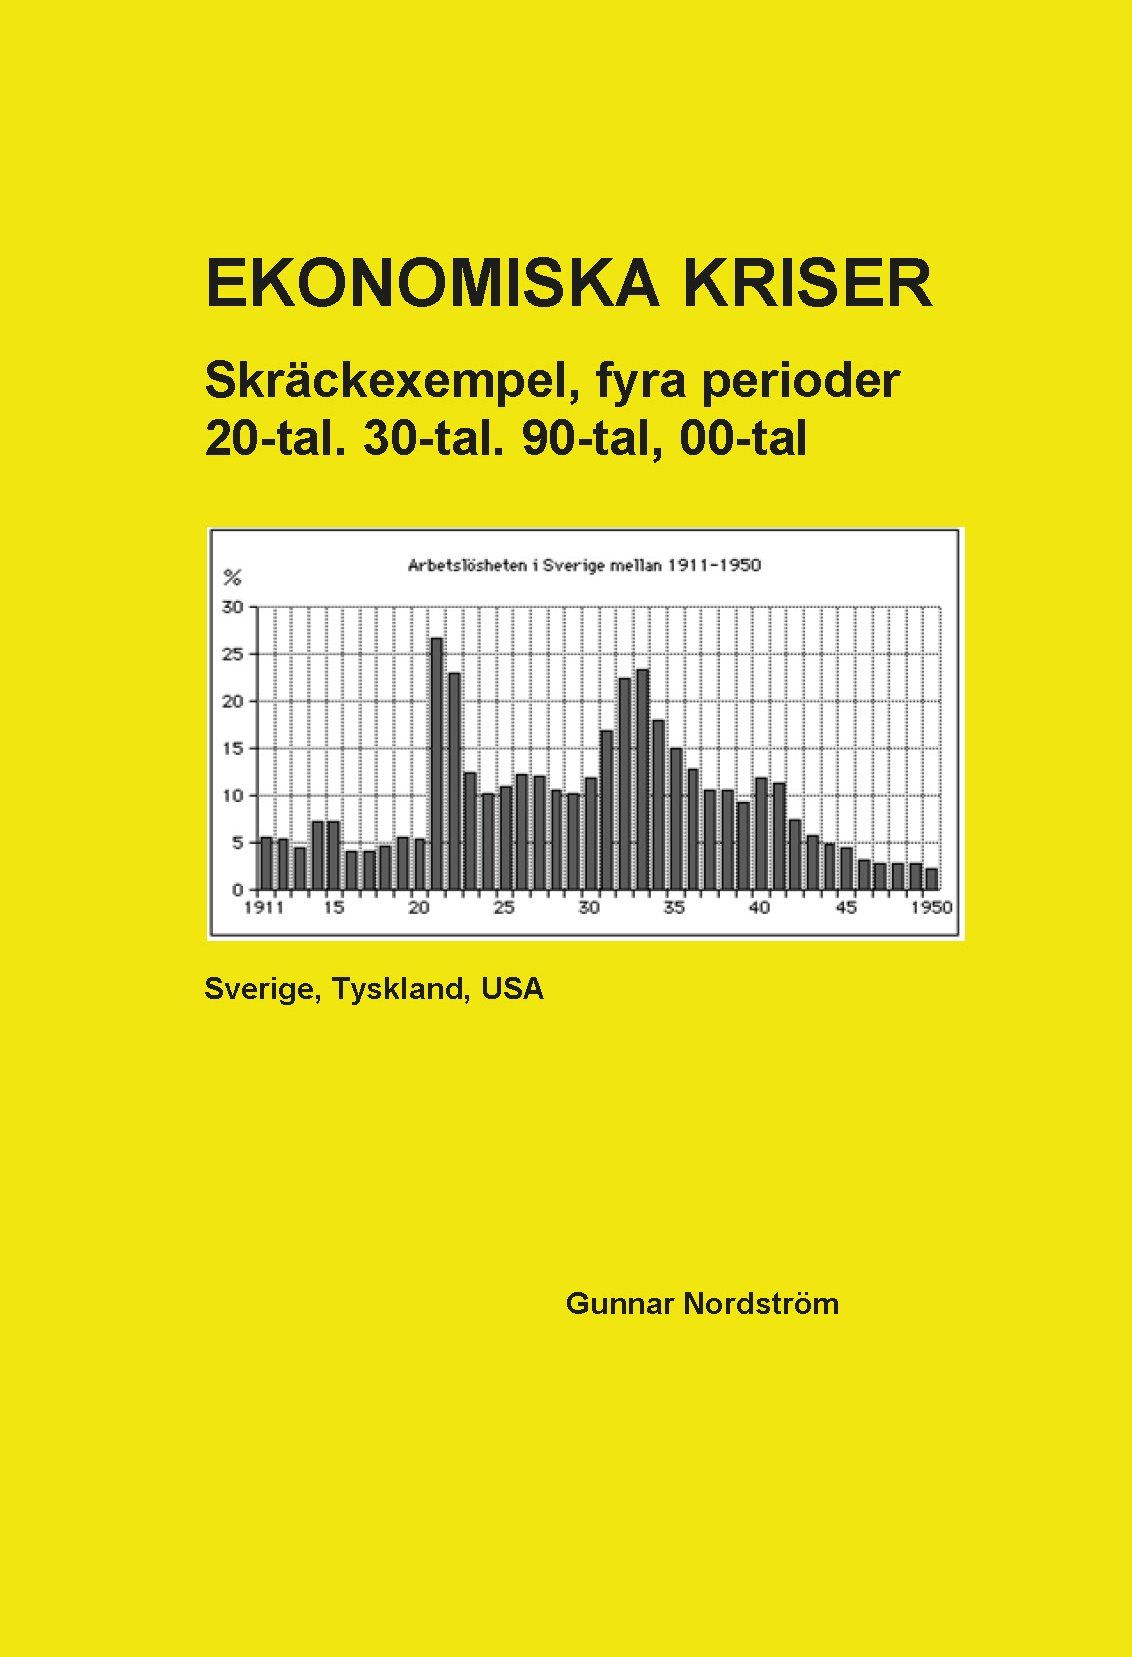 Ekonomiska kriser, e-bog af Gunnar Nordström